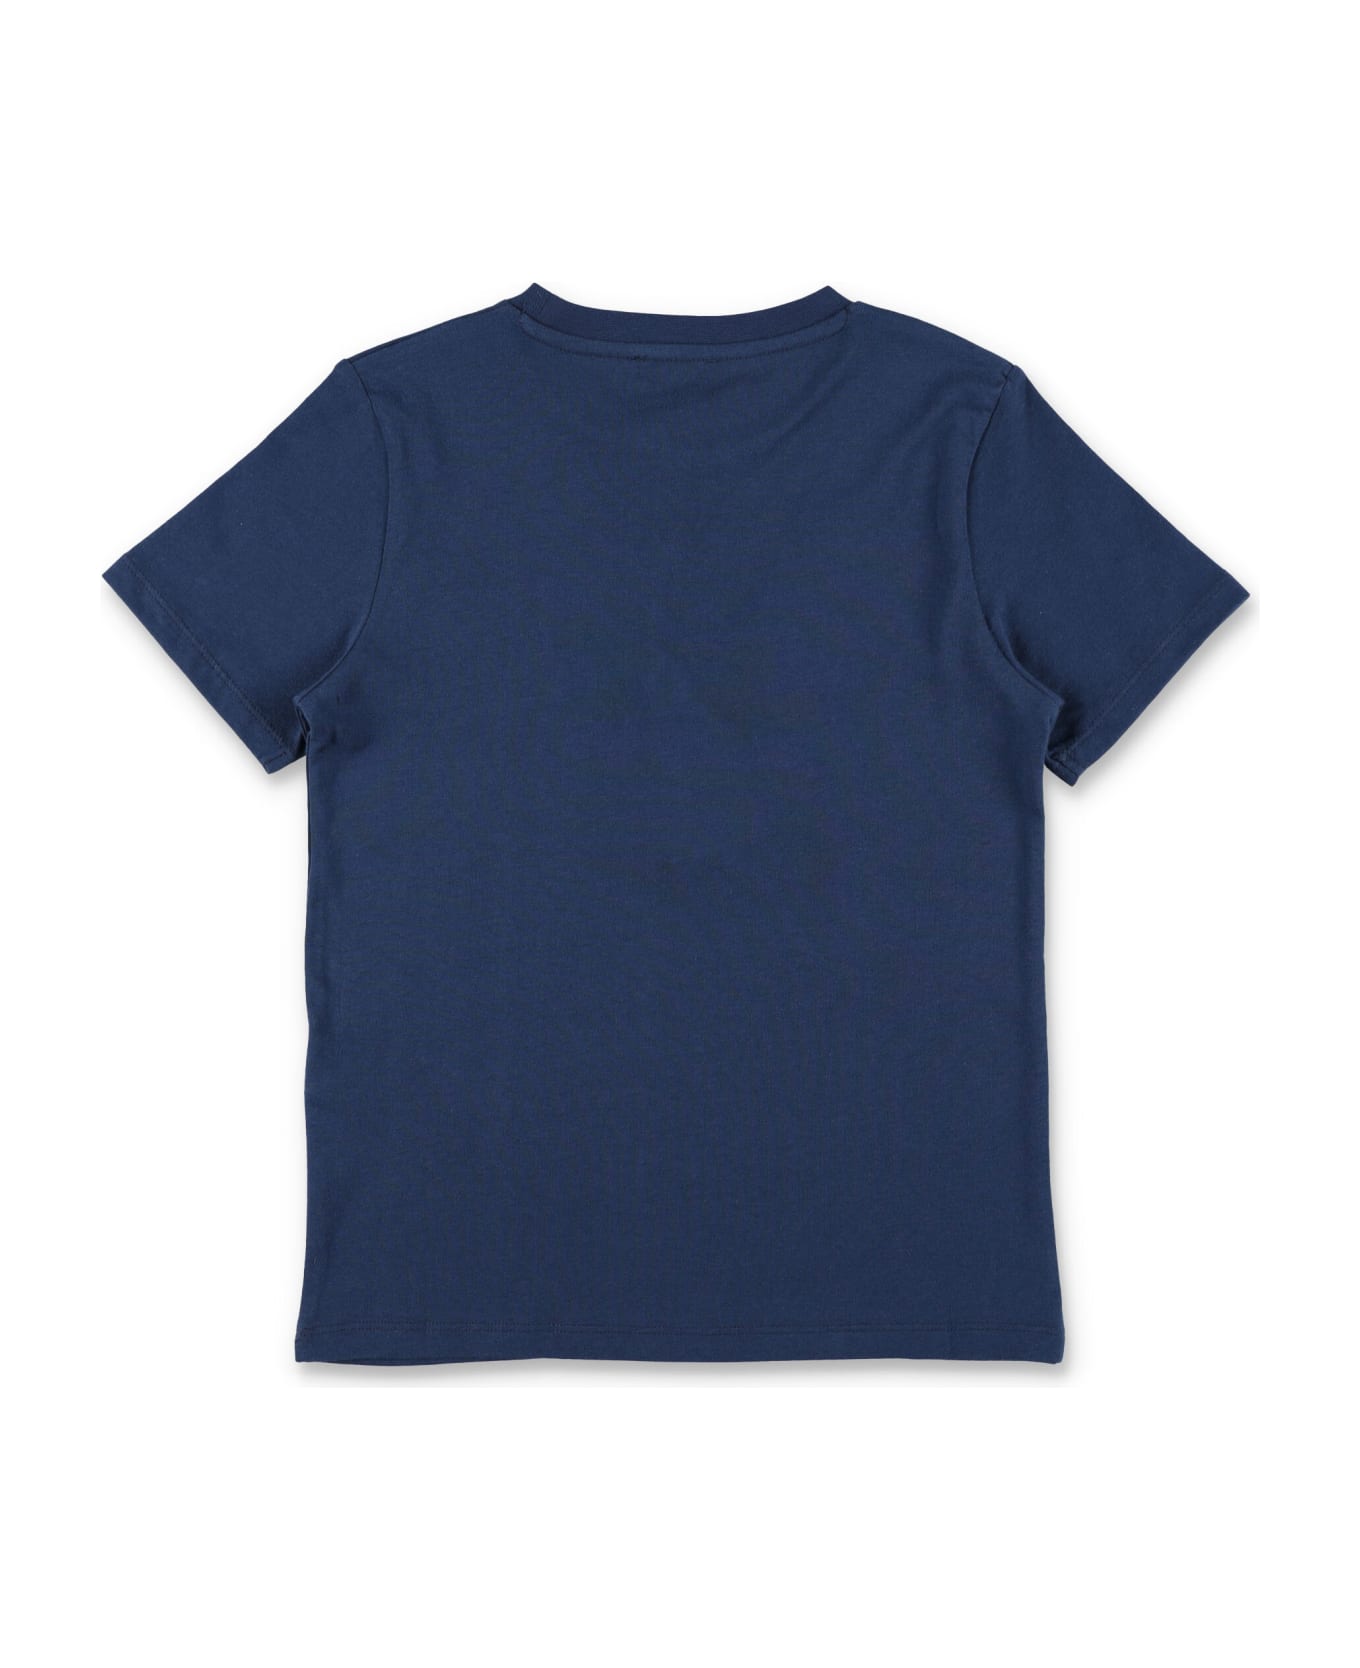 Kenzo Kids Elephant T-shirt - NAVY